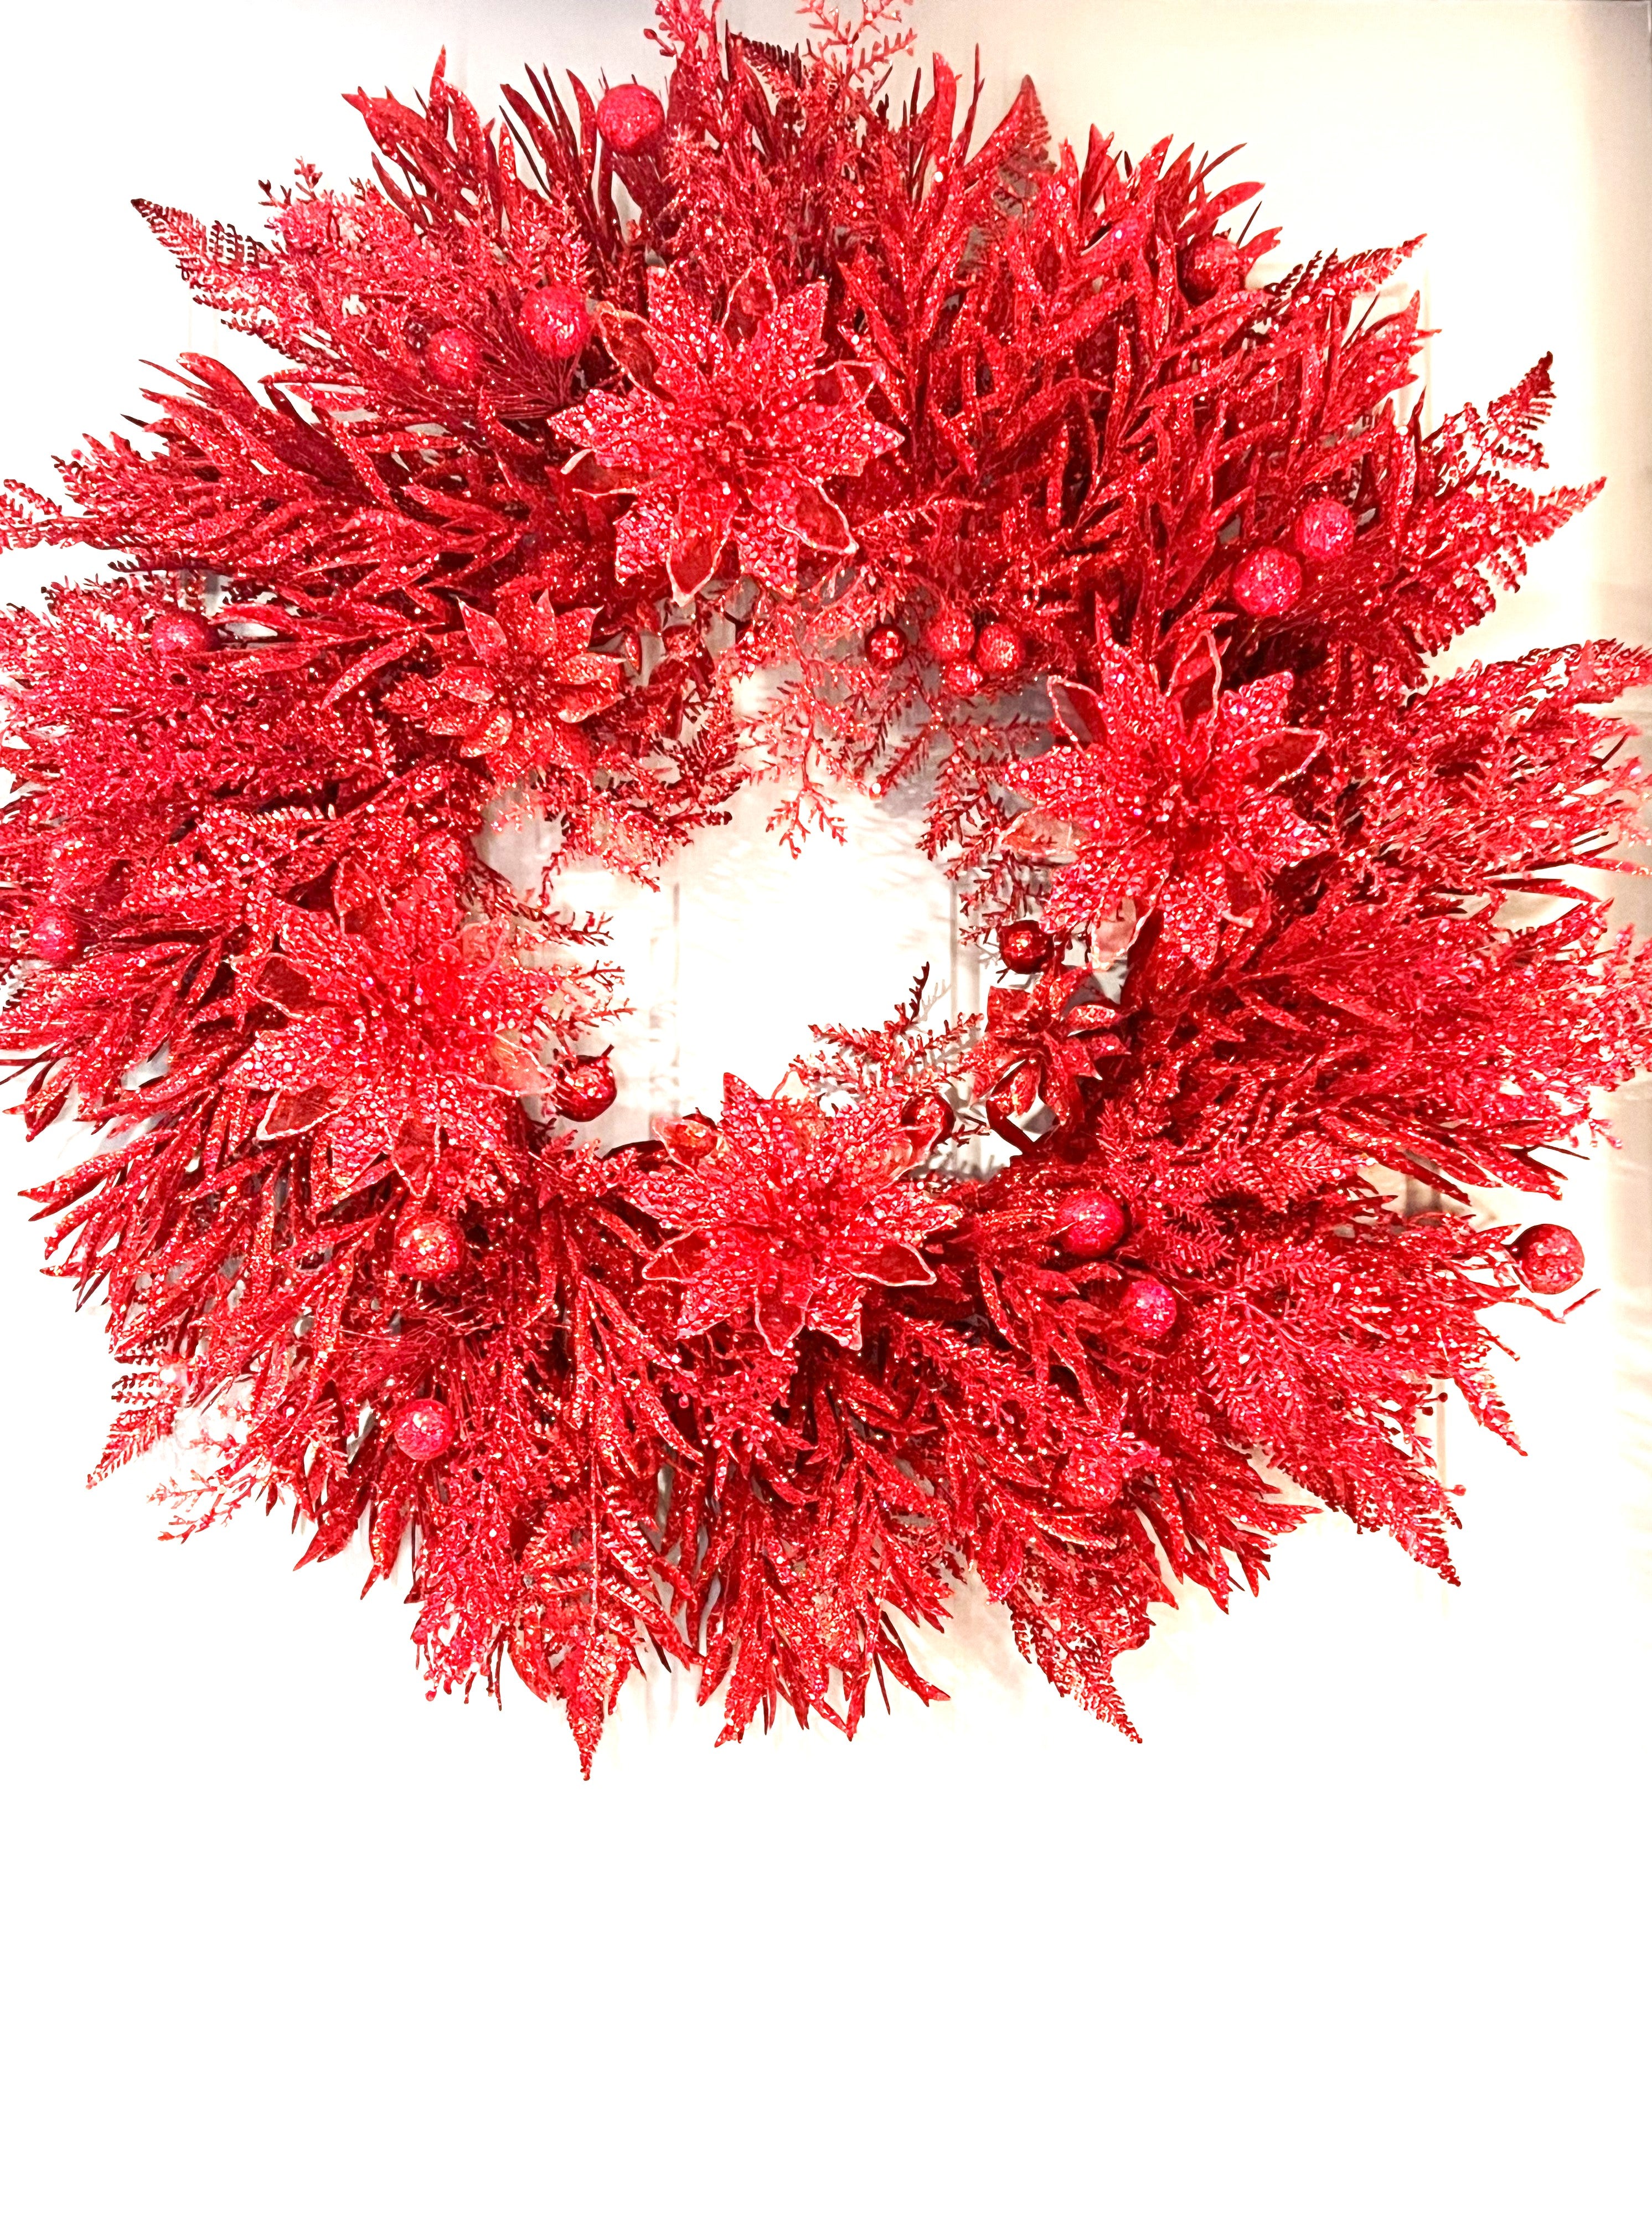 Festive Glittered-Red Bay Leaves Berry Wreath. 28" Diameter